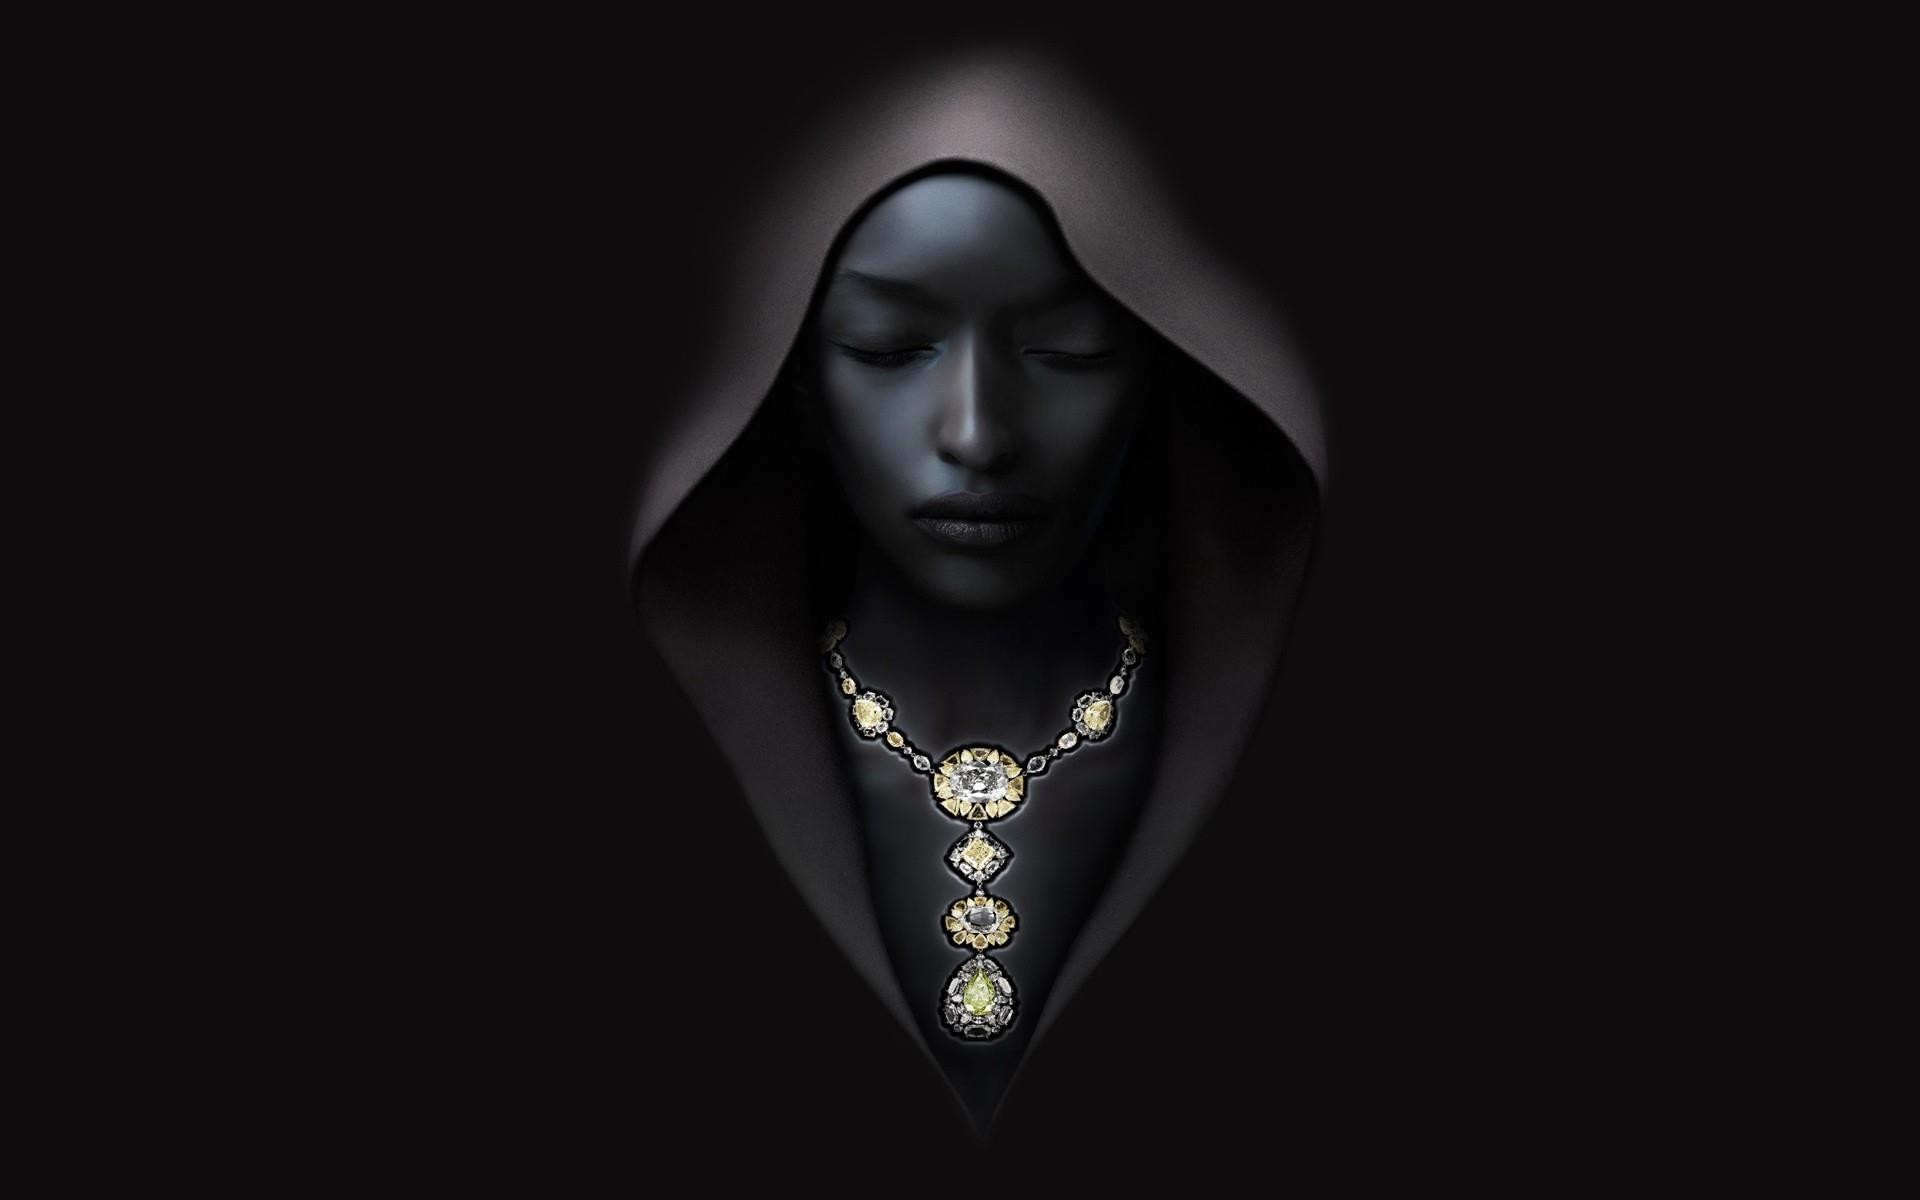 General 1920x1200 women portrait dark face hoods closed eyes necklace artwork simple background black background